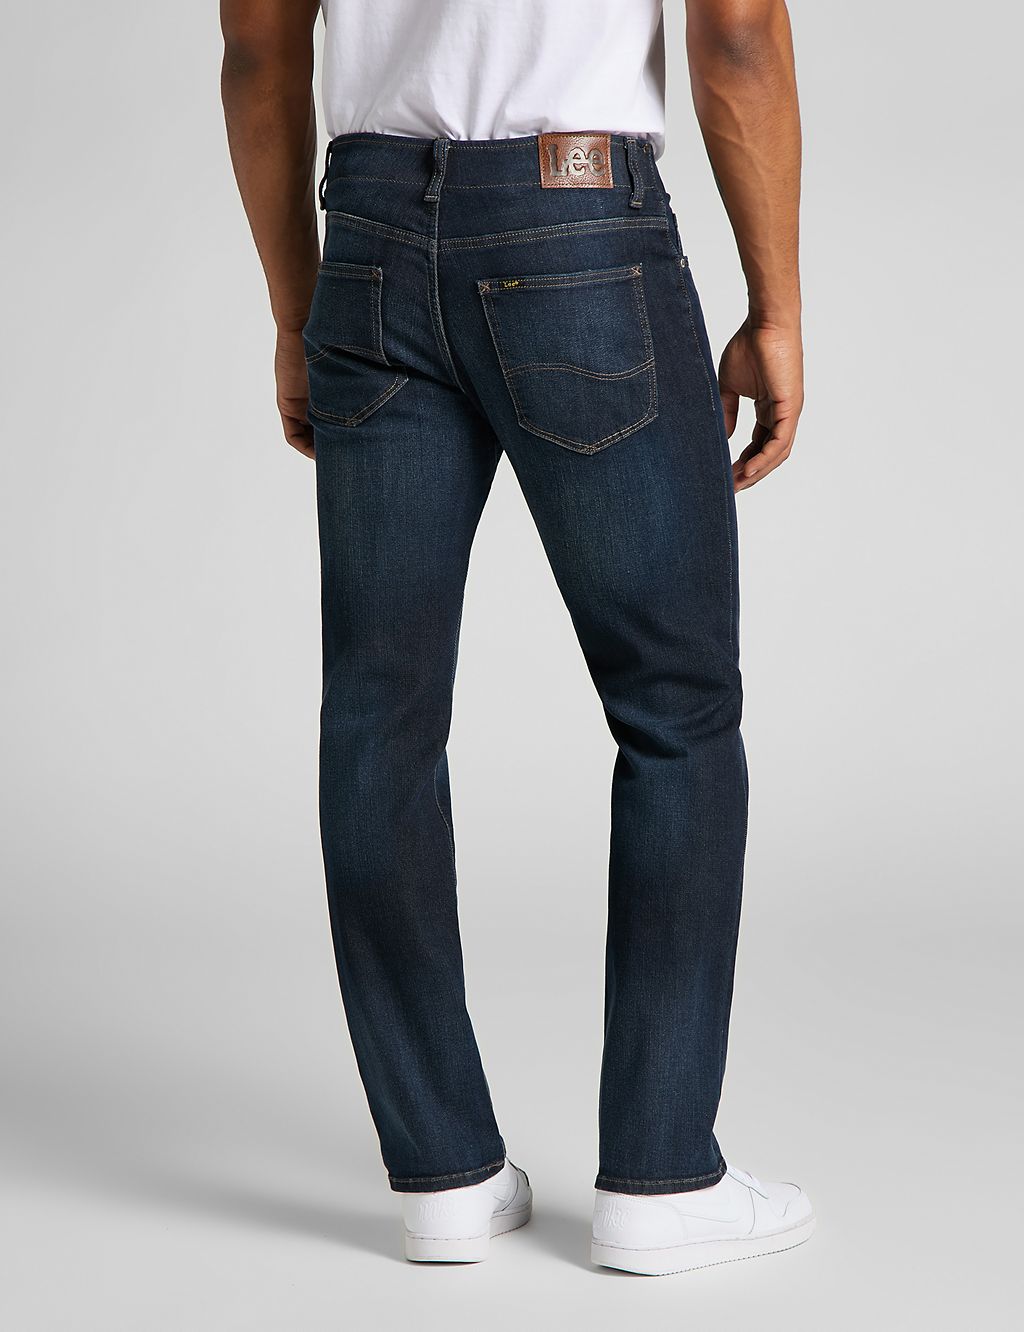 Straight Fit XM 5 Pocket Jeans | Lee | M&S